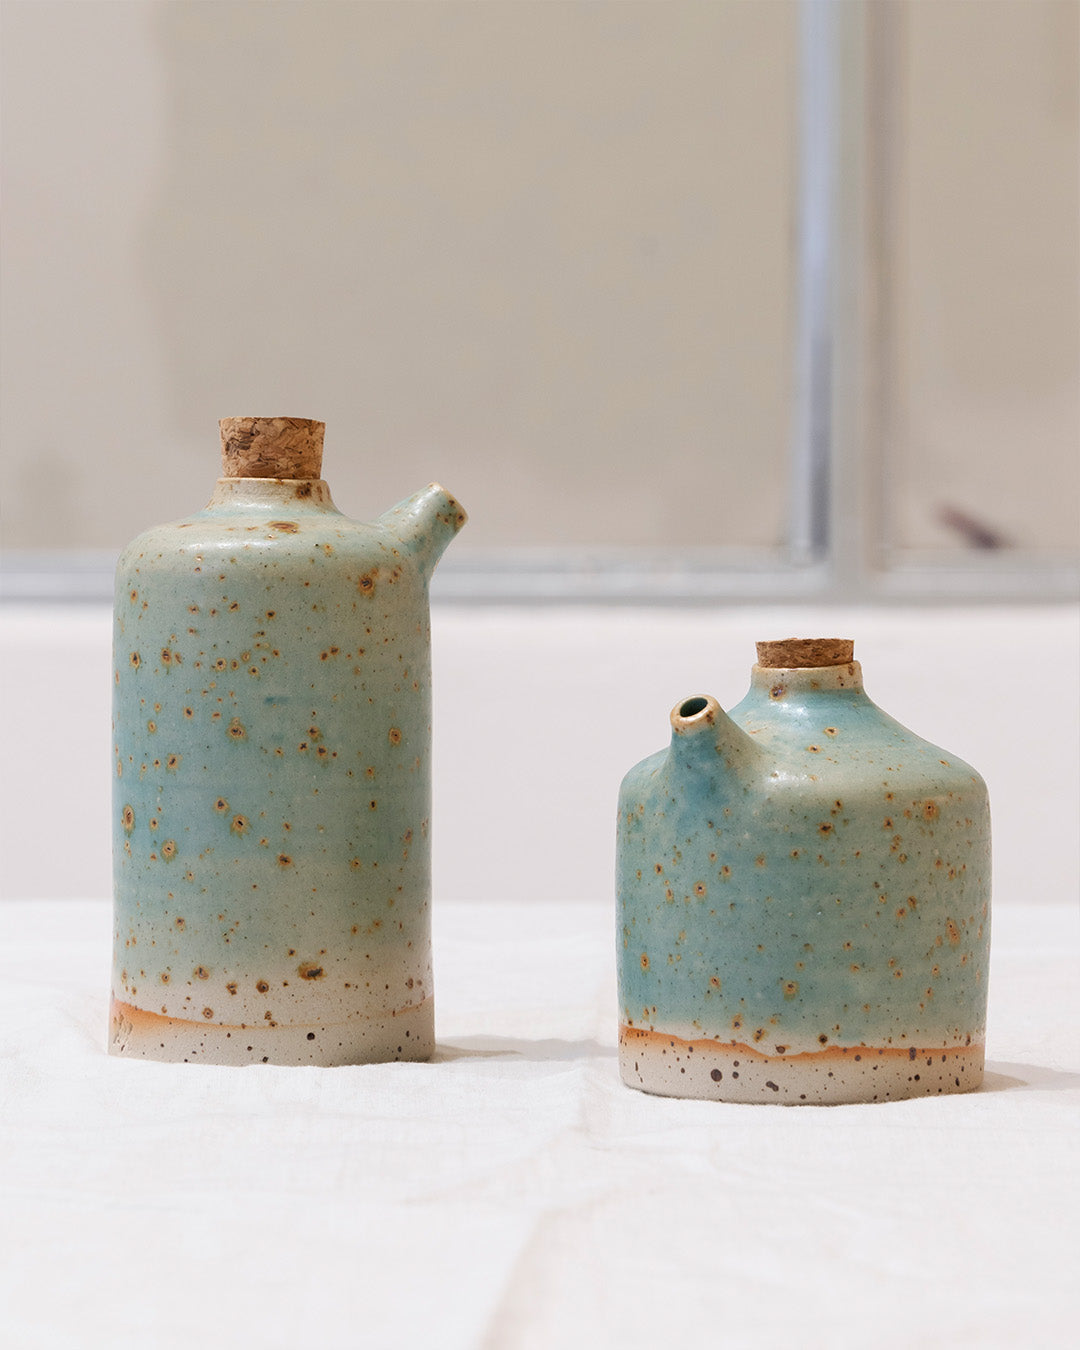 Ceramic handcrafted oil and vinegar cruets